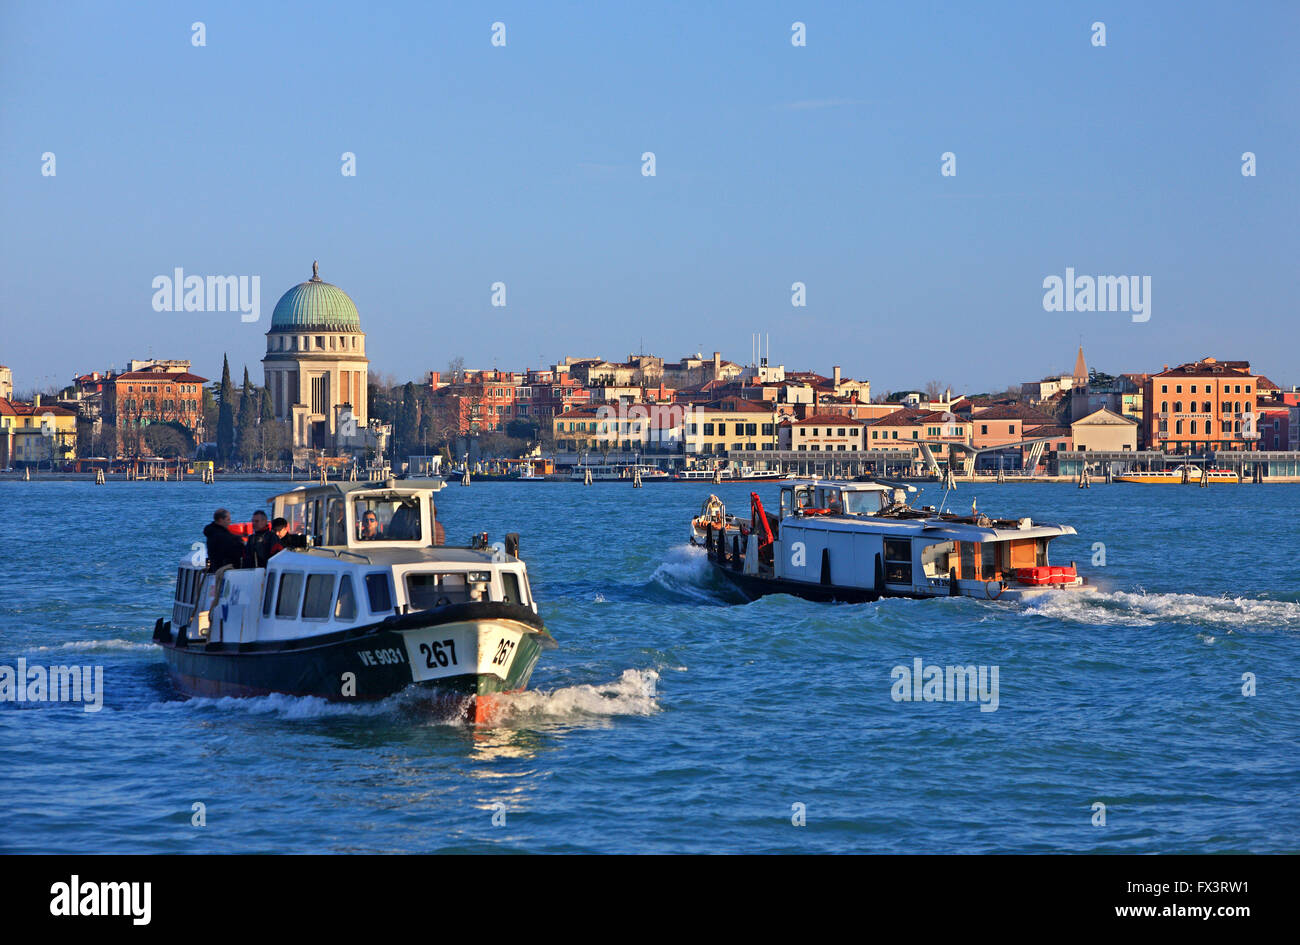 Die Insel Lido, Venedig, Veneto, Italien Vaporettos (lokal "Busse") vorbei. Stockfoto